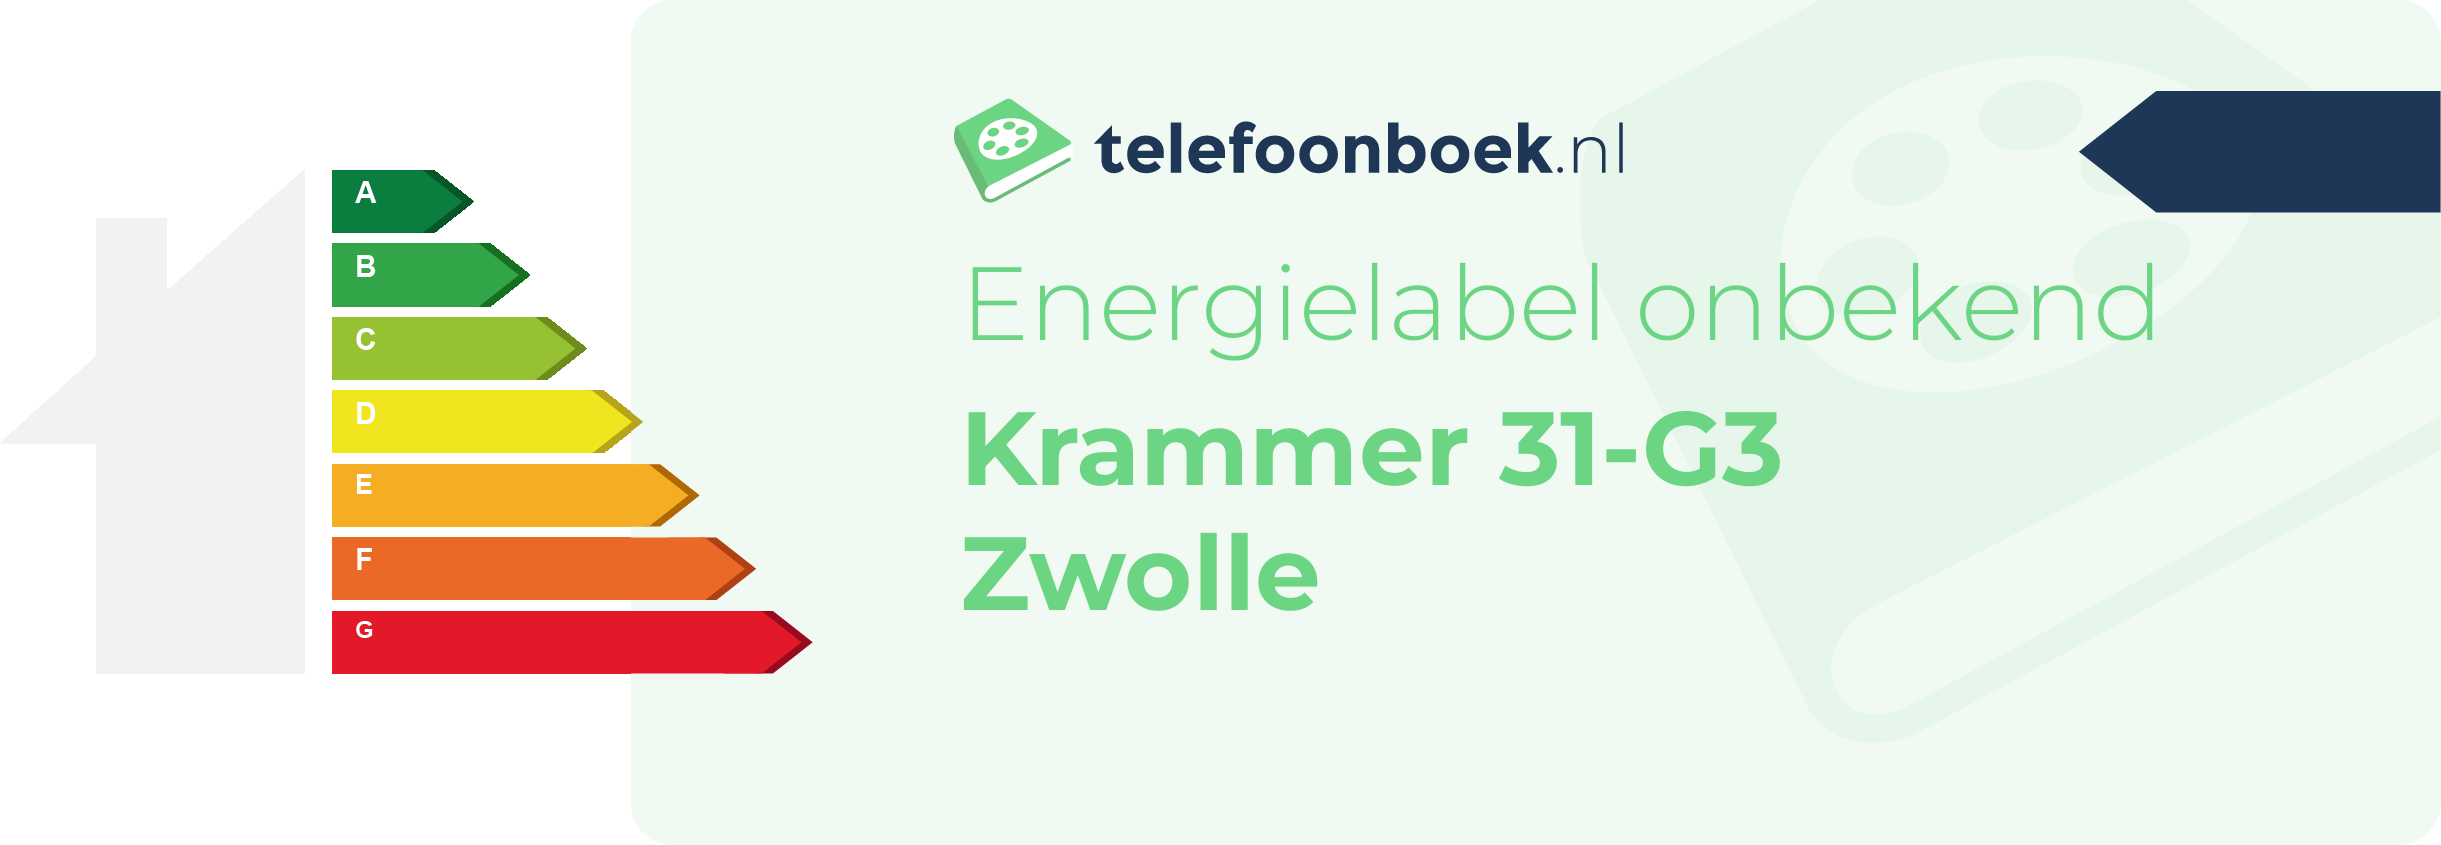 Energielabel Krammer 31-G3 Zwolle